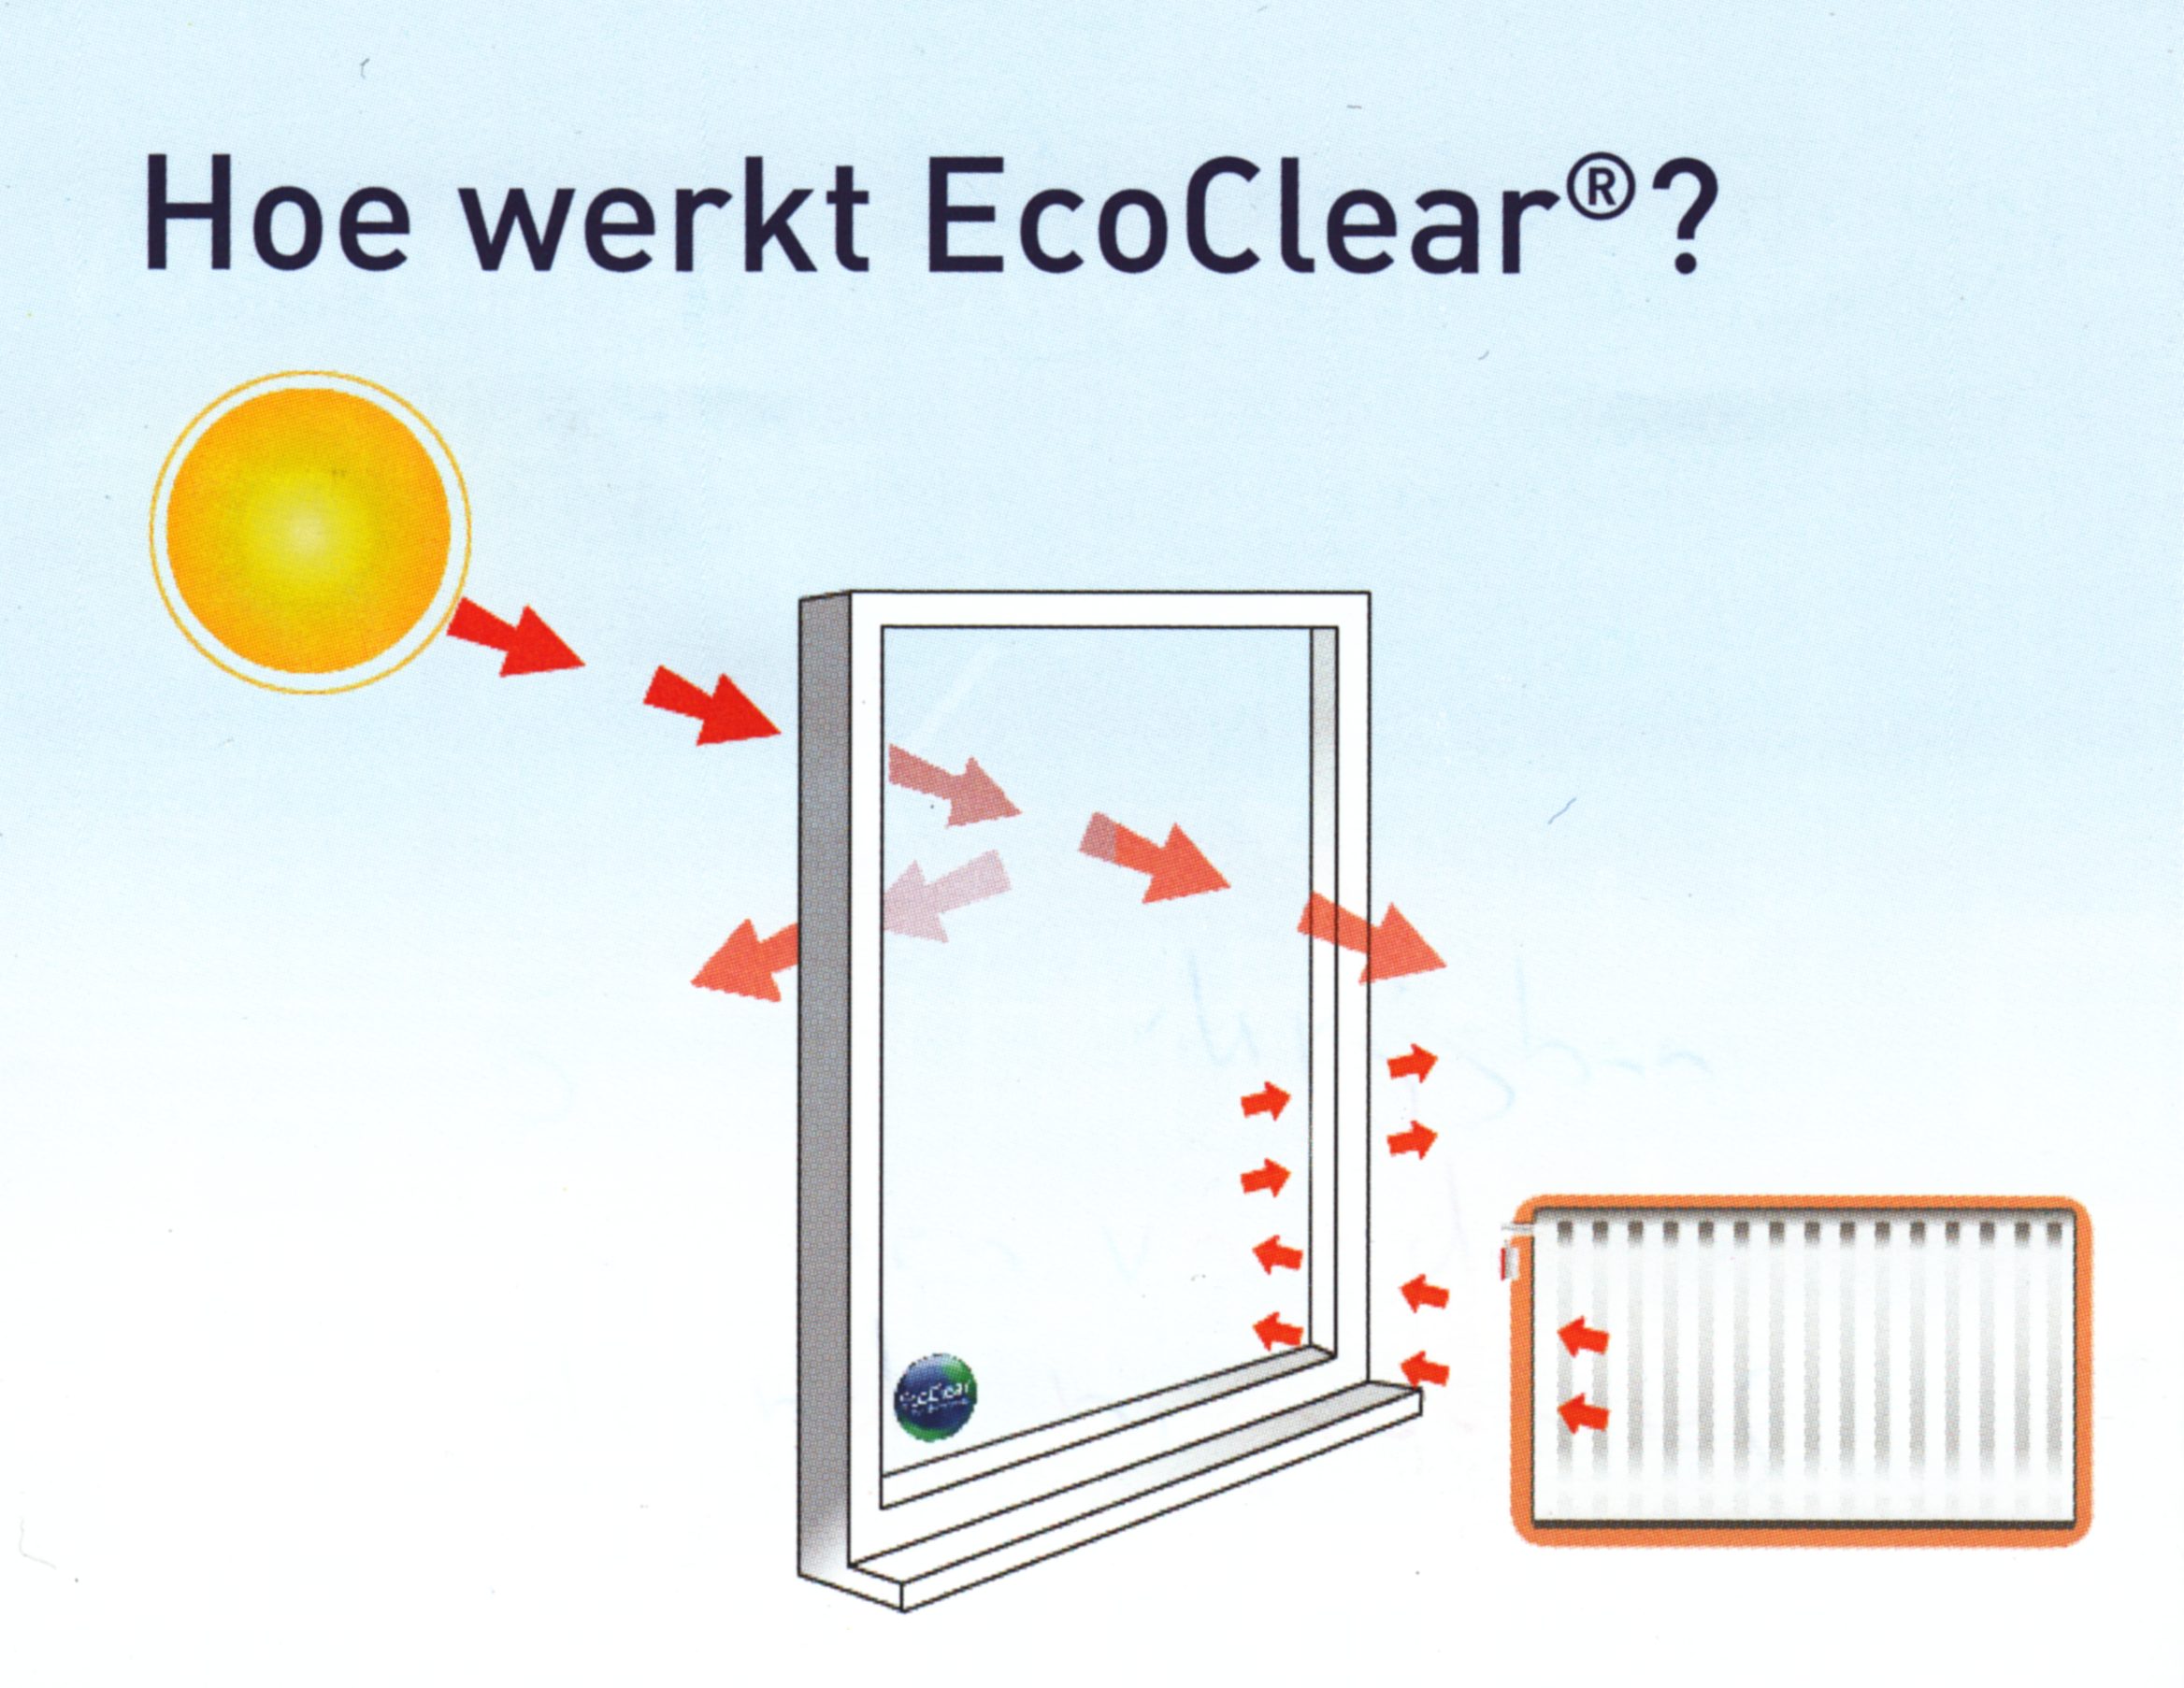 EcoClear